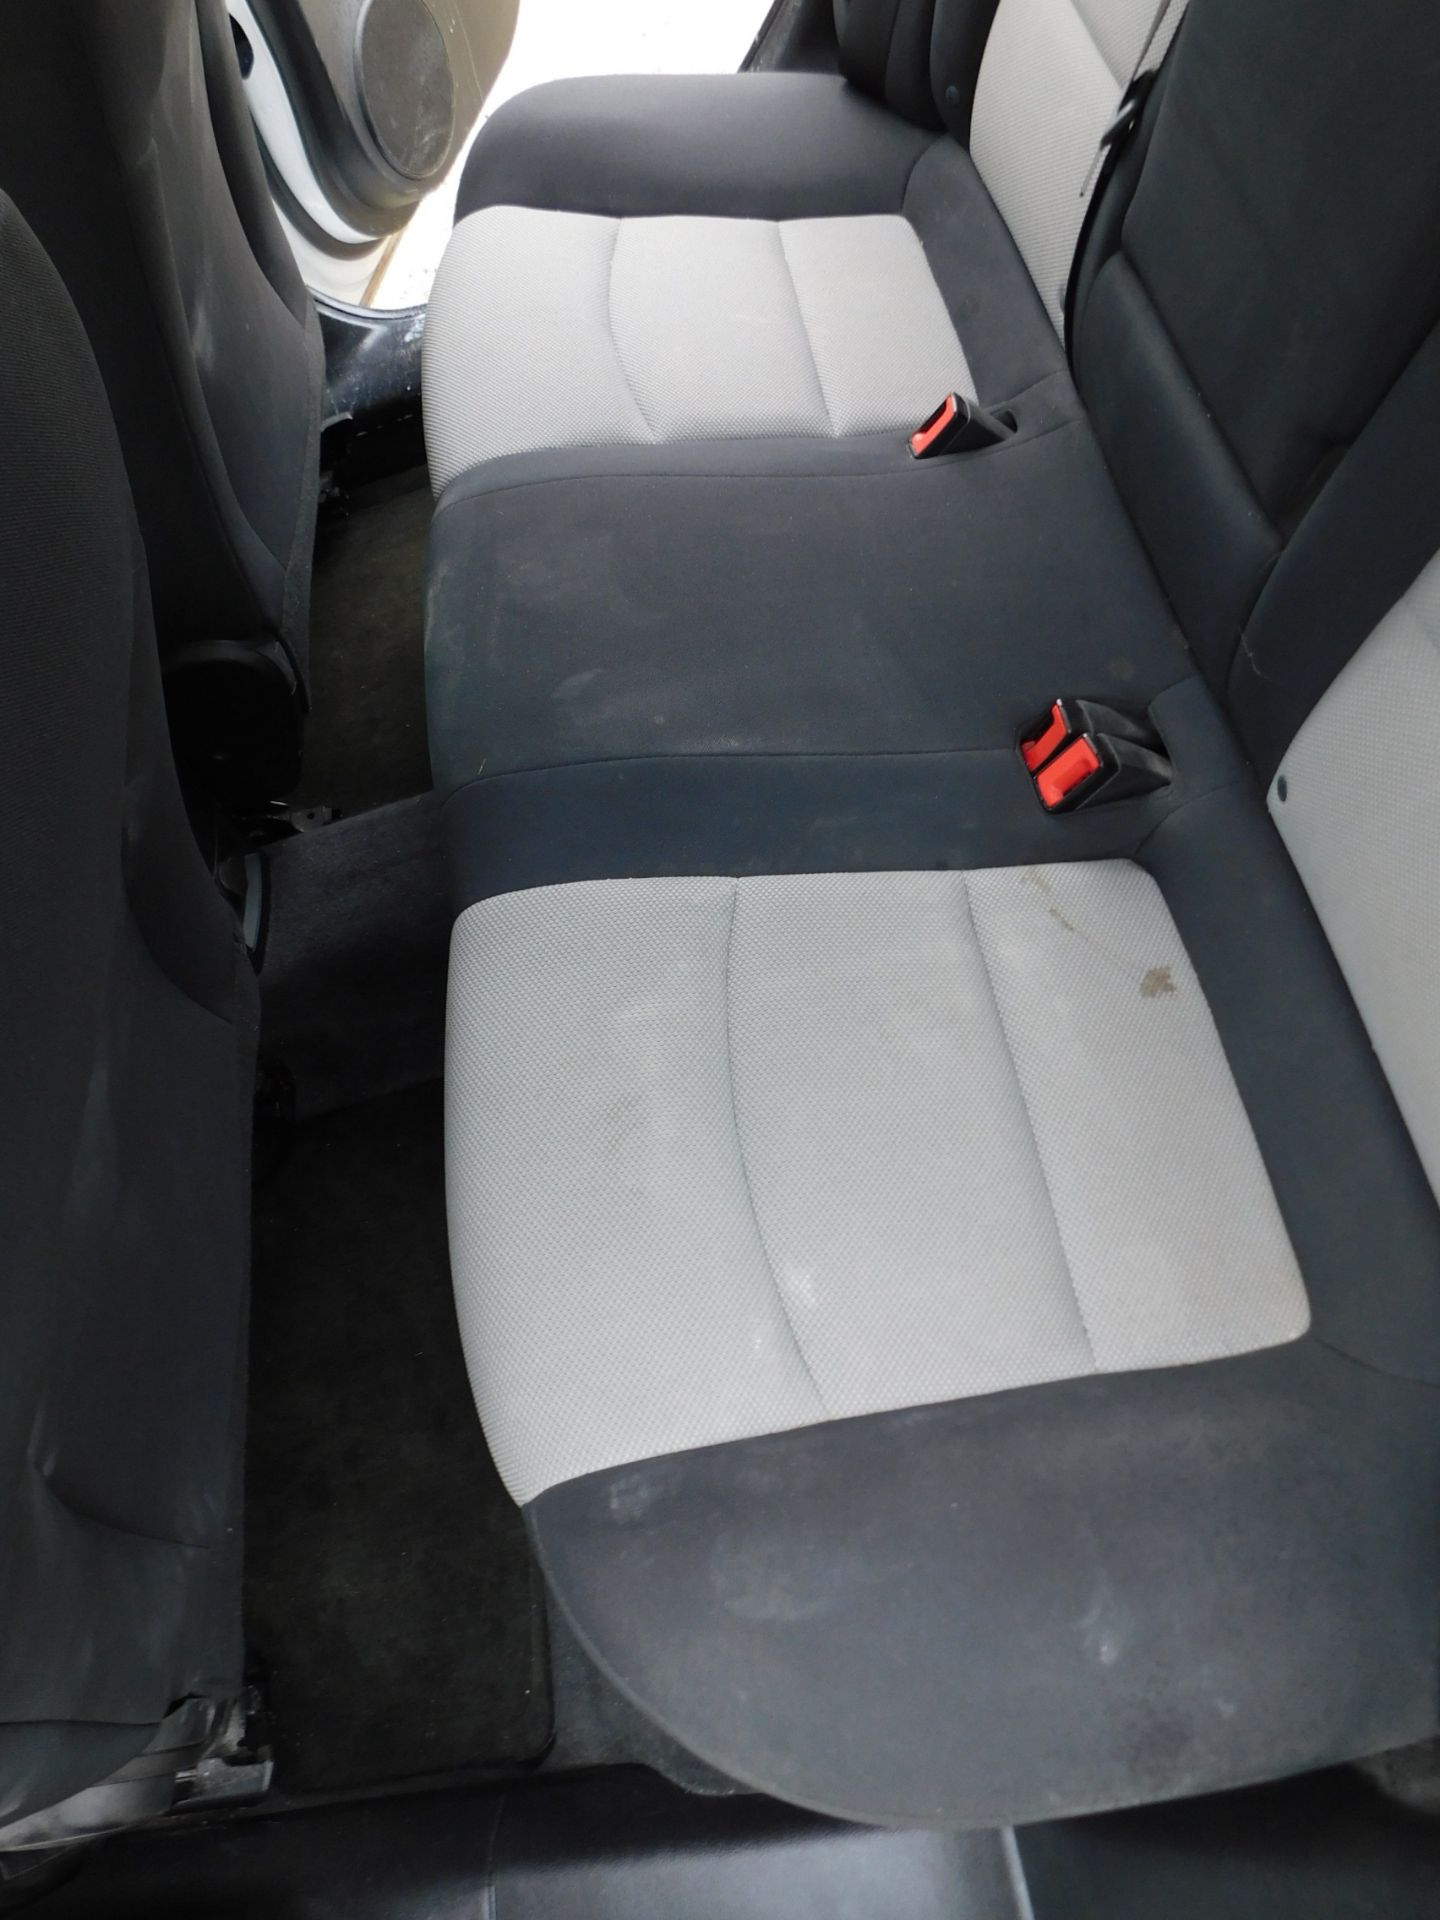 2014 Chevrolet Cruze 4-Door Sedan, VIN 1G1PA5SH1E7315697, AM/FM, AC, Cruise Control, PW, PL, 111,323 - Image 18 of 41